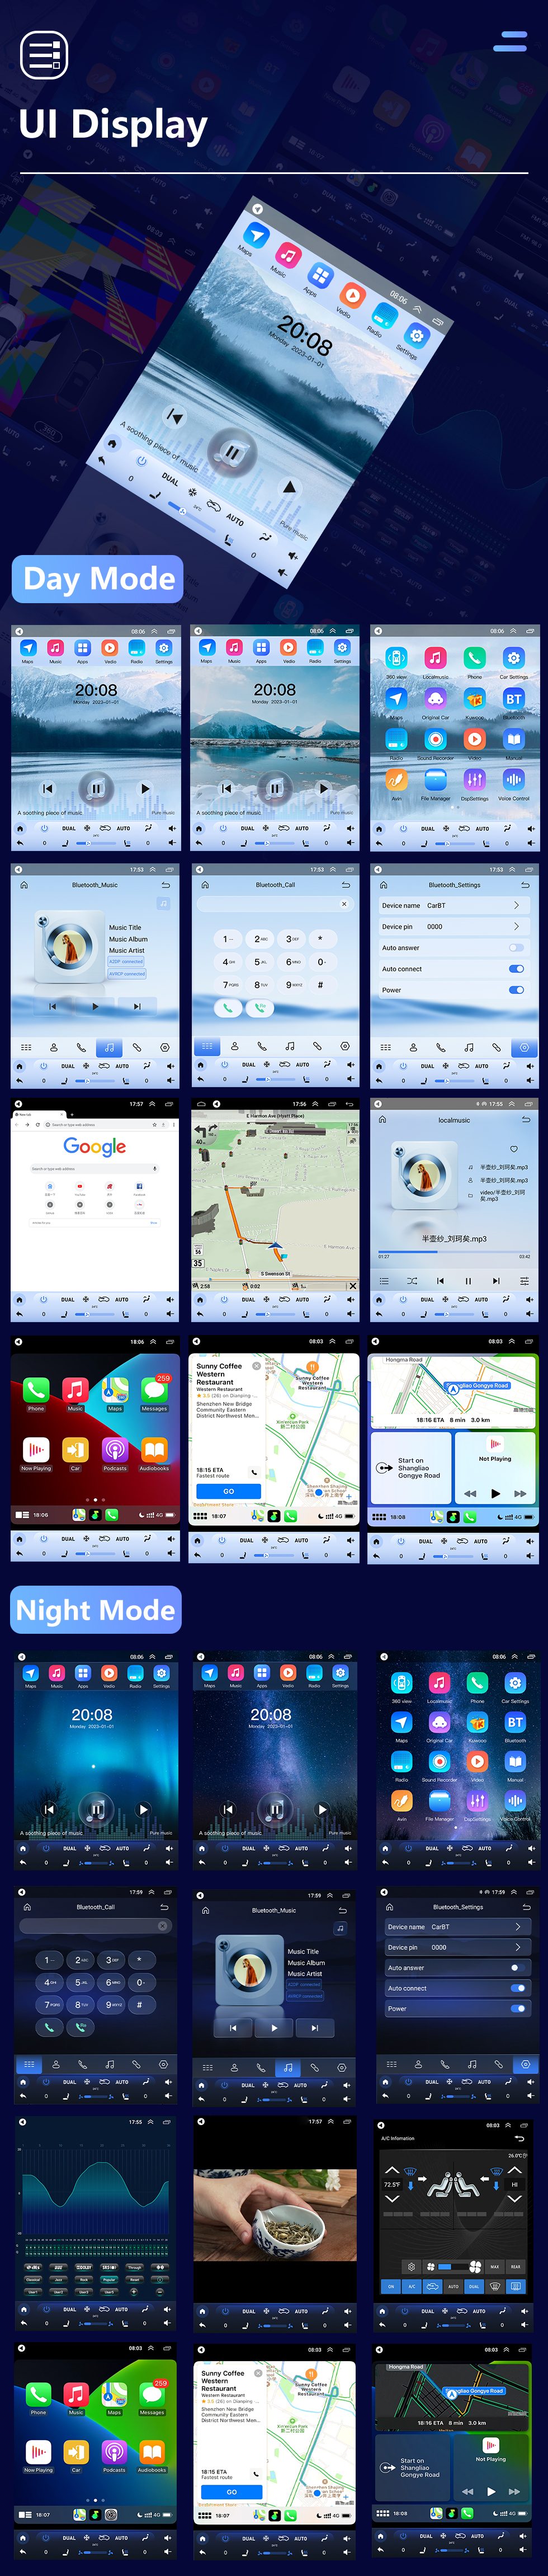 Seicane OEM 12.1 pulgadas Android 10.0 para 2008-2015 TOYOTA LAND CRUISER Radio Sistema de navegación GPS con Bluetooth Carplay compatible con OBD2 DVR TPMS